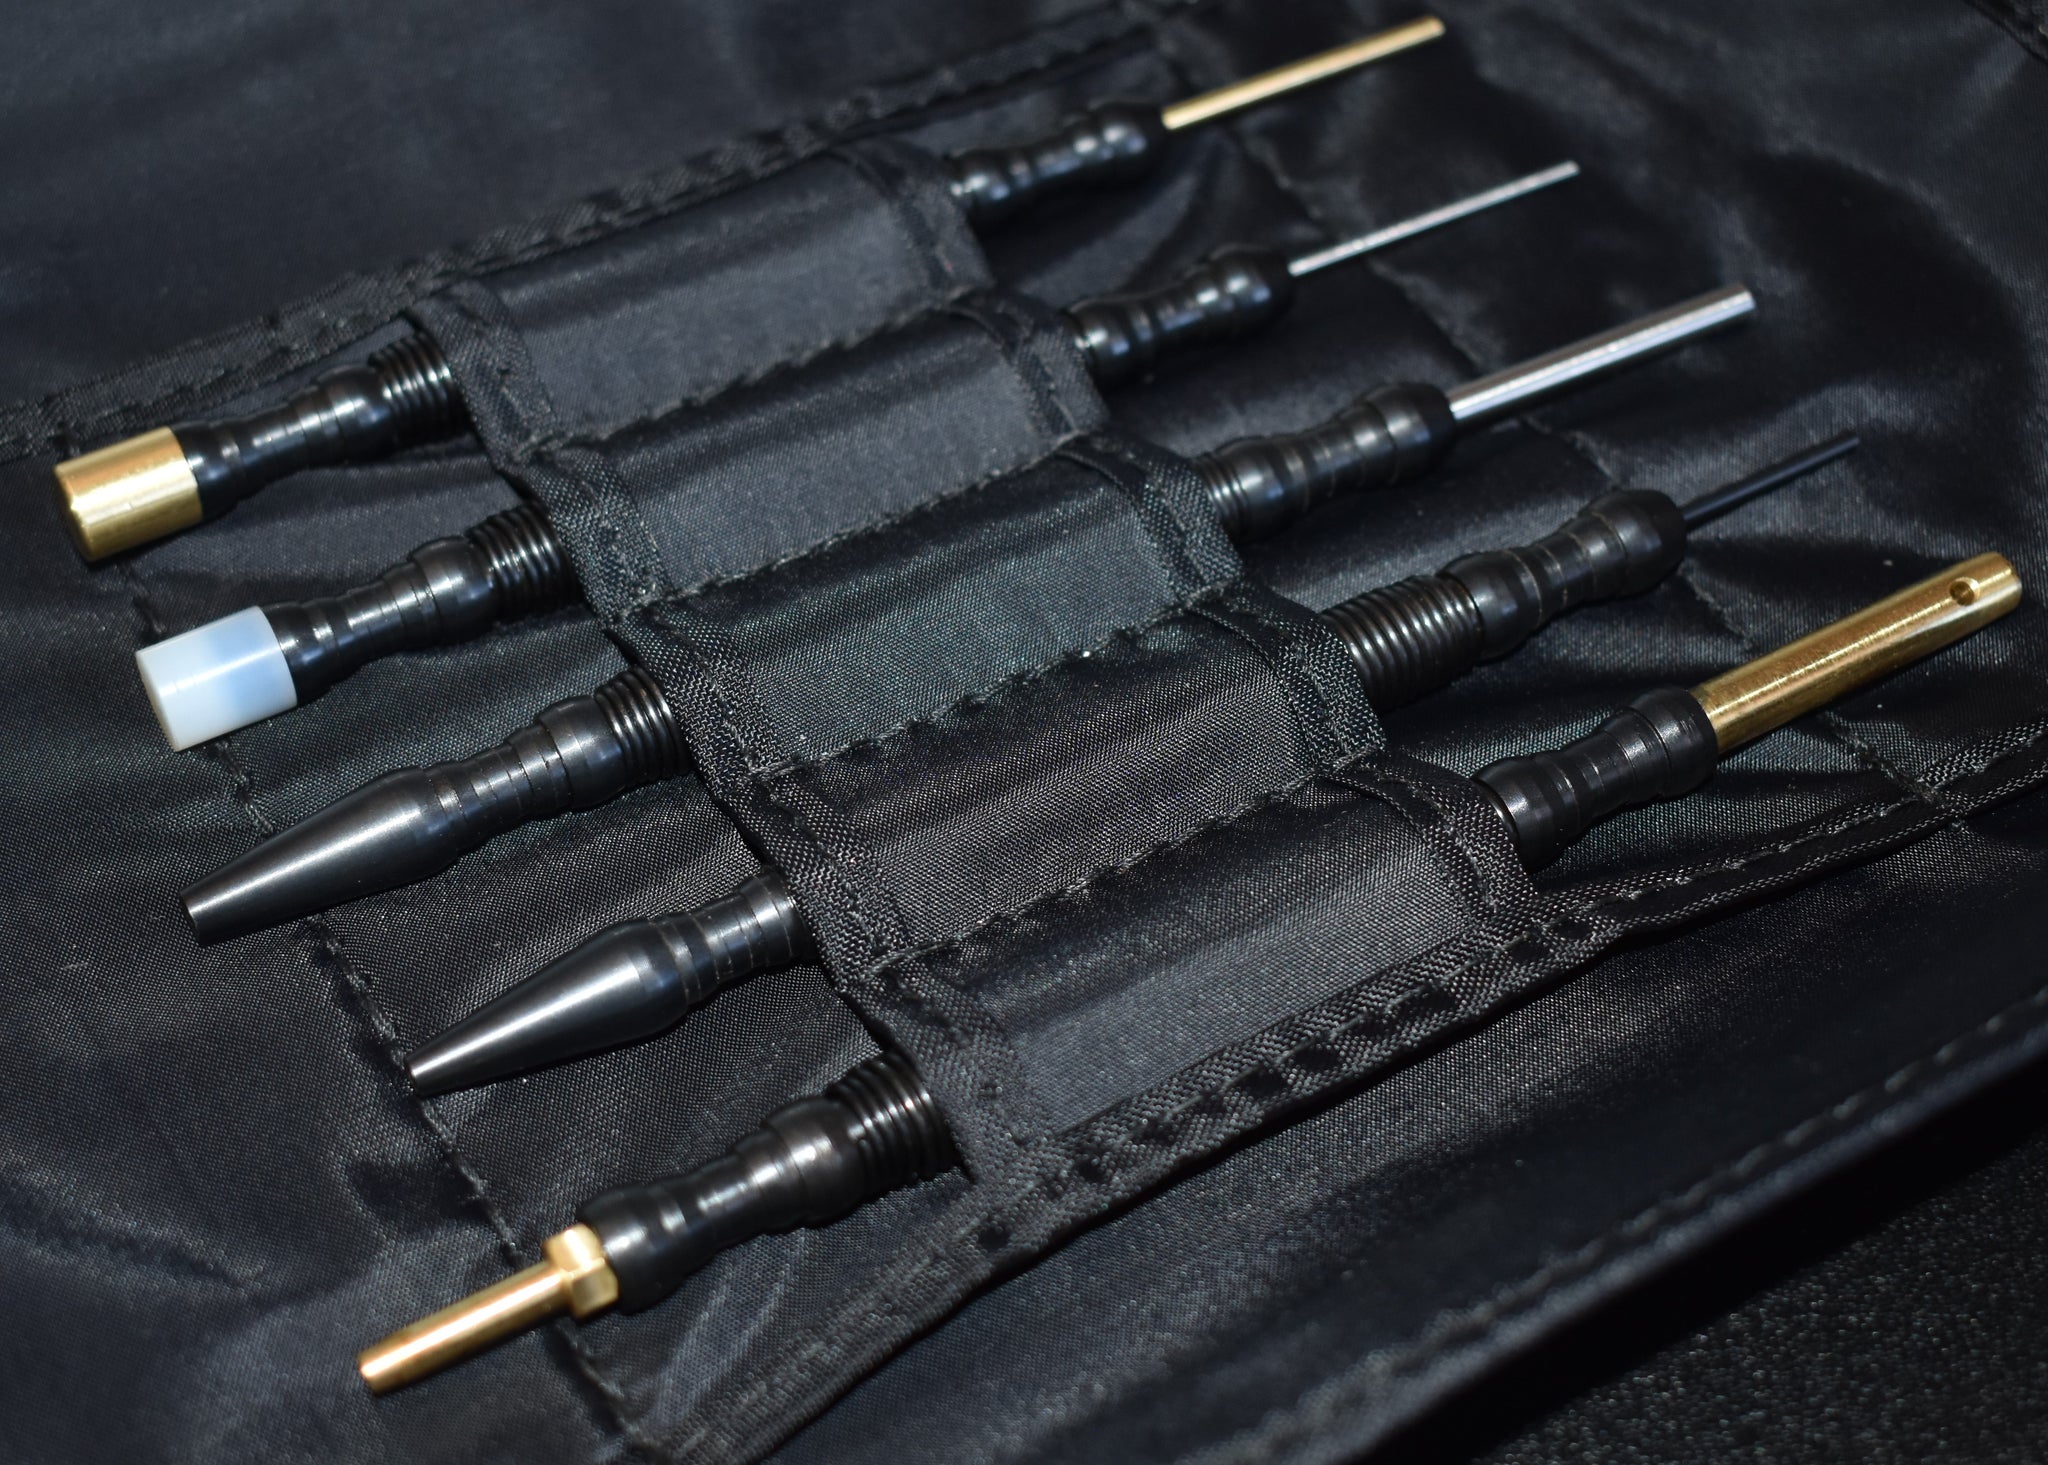 (AR-TT) 5 piece Gun Smith Set -The AR TakeDown Tool 